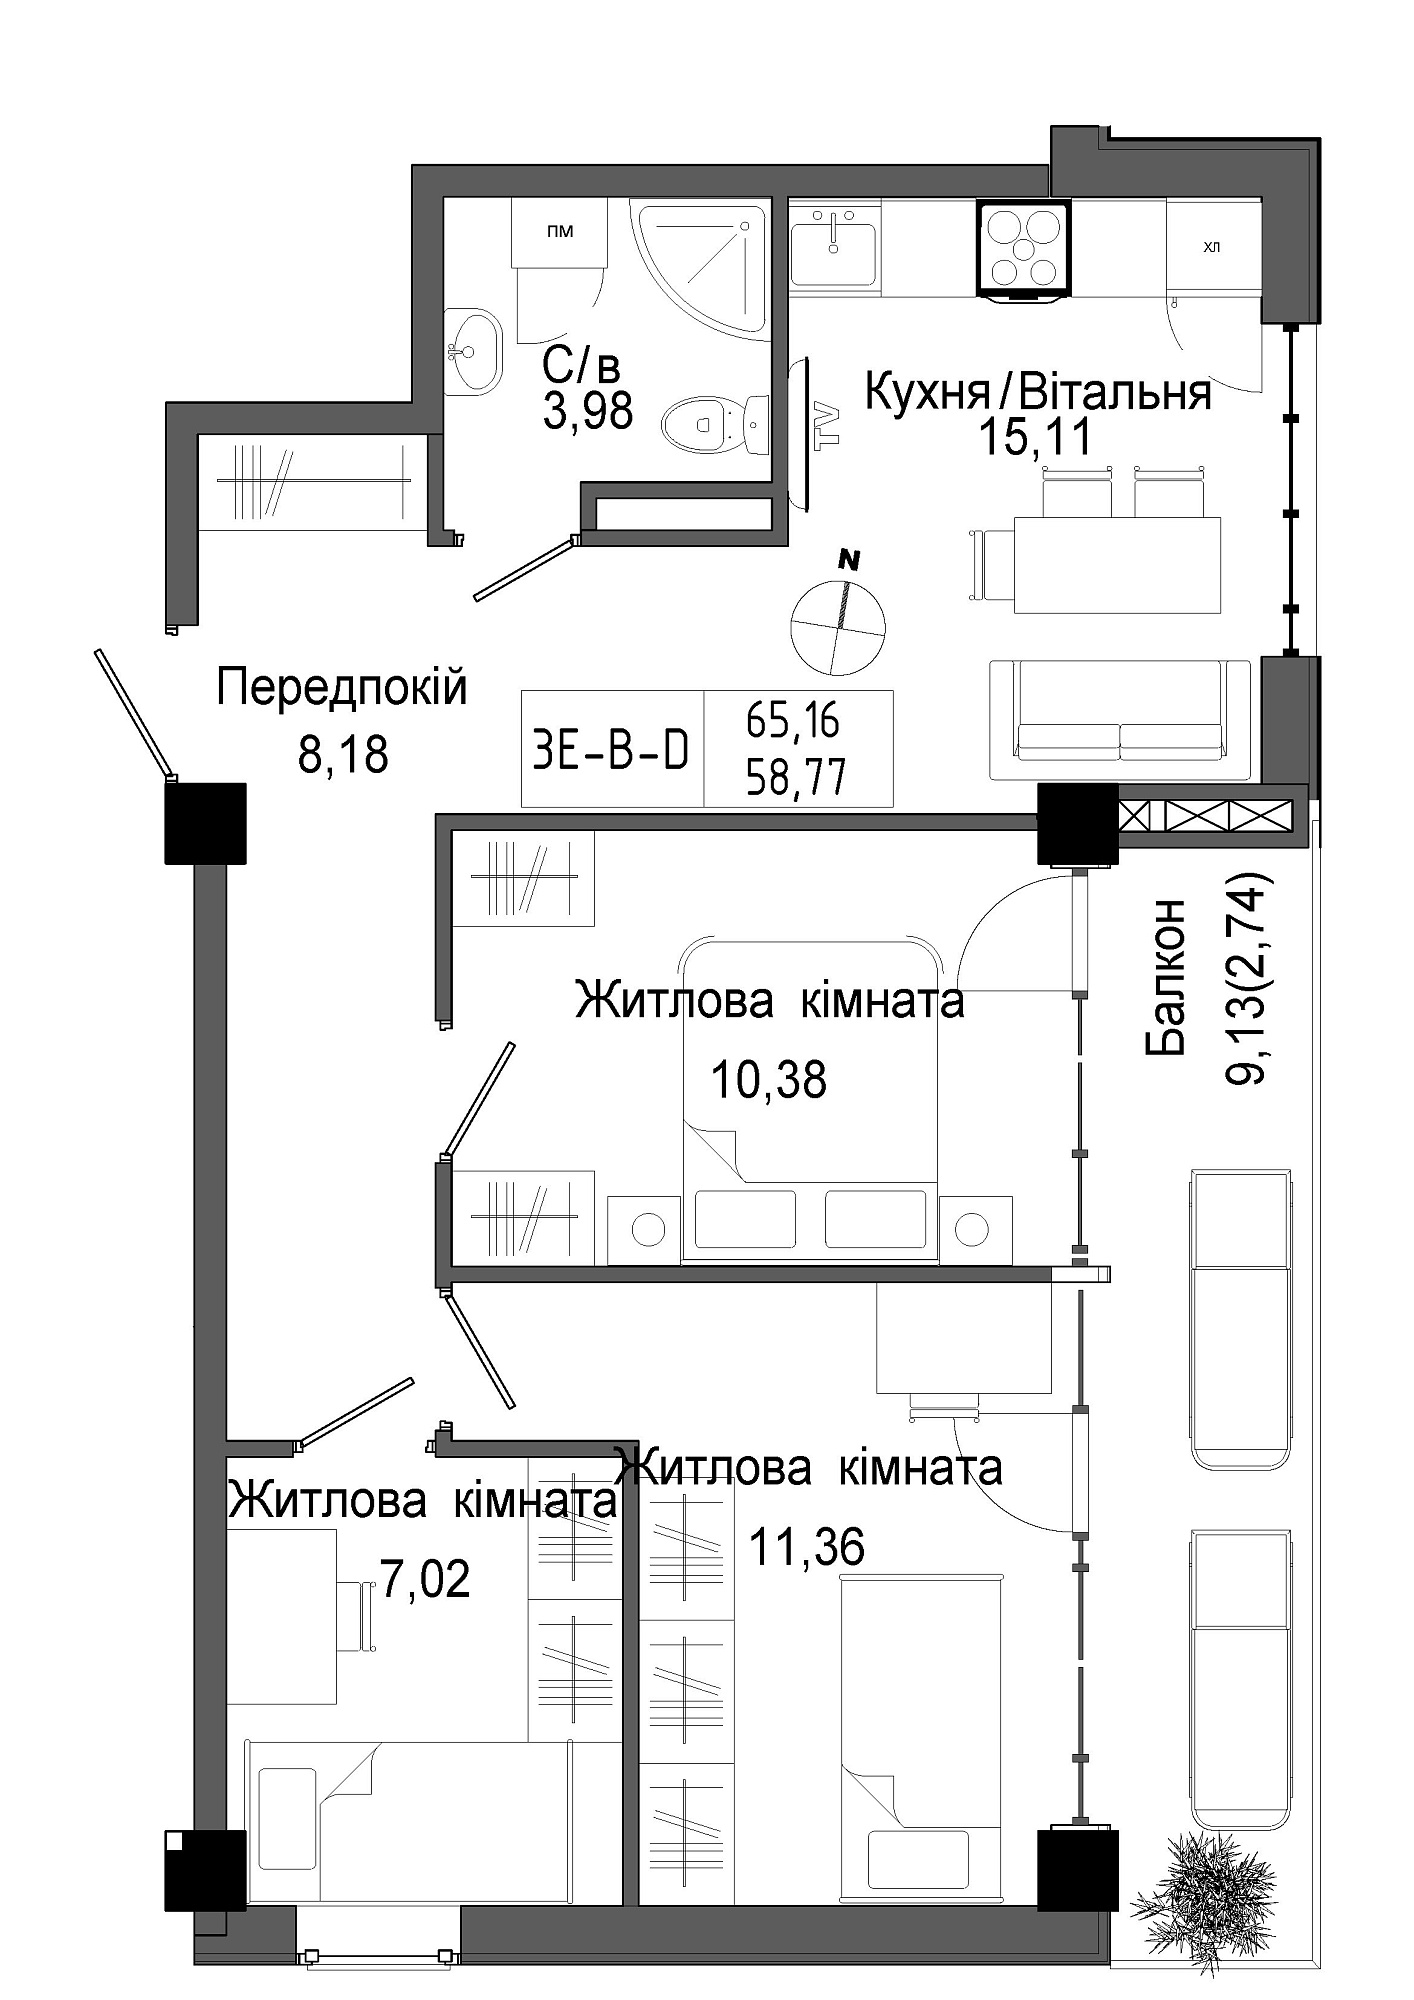 Planning 3-rm flats area 58.77m2, UM-006-09/0004.